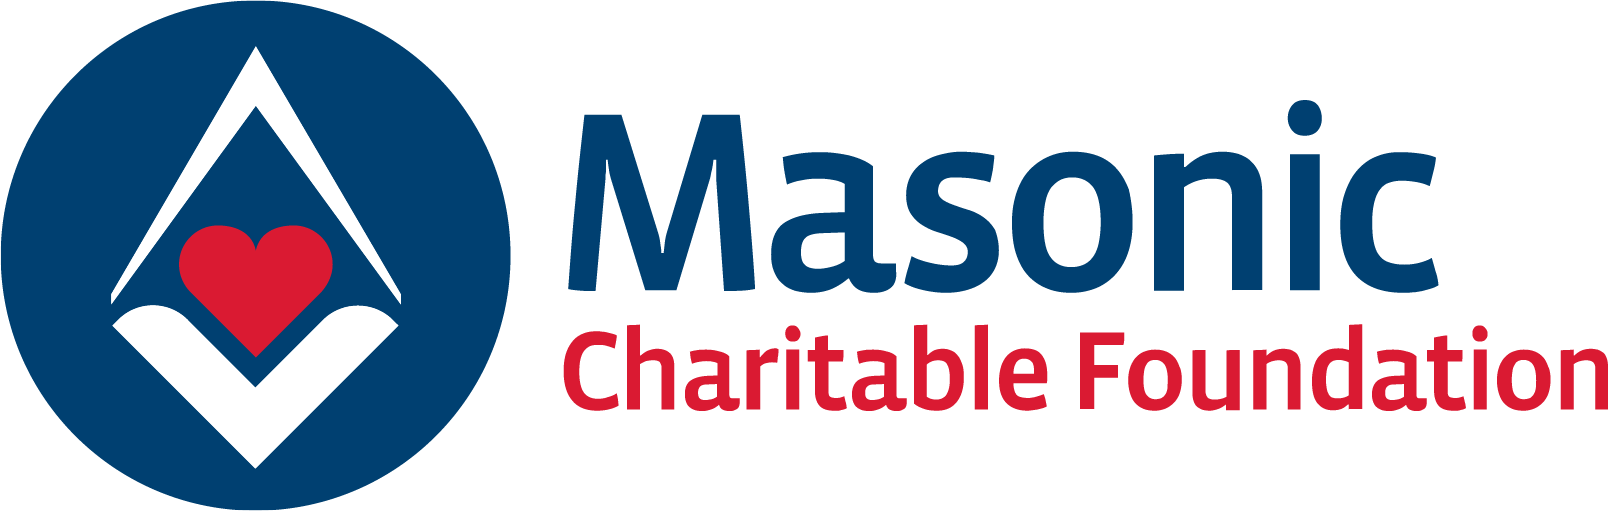 The logo of the Masonic Charitable Foundation